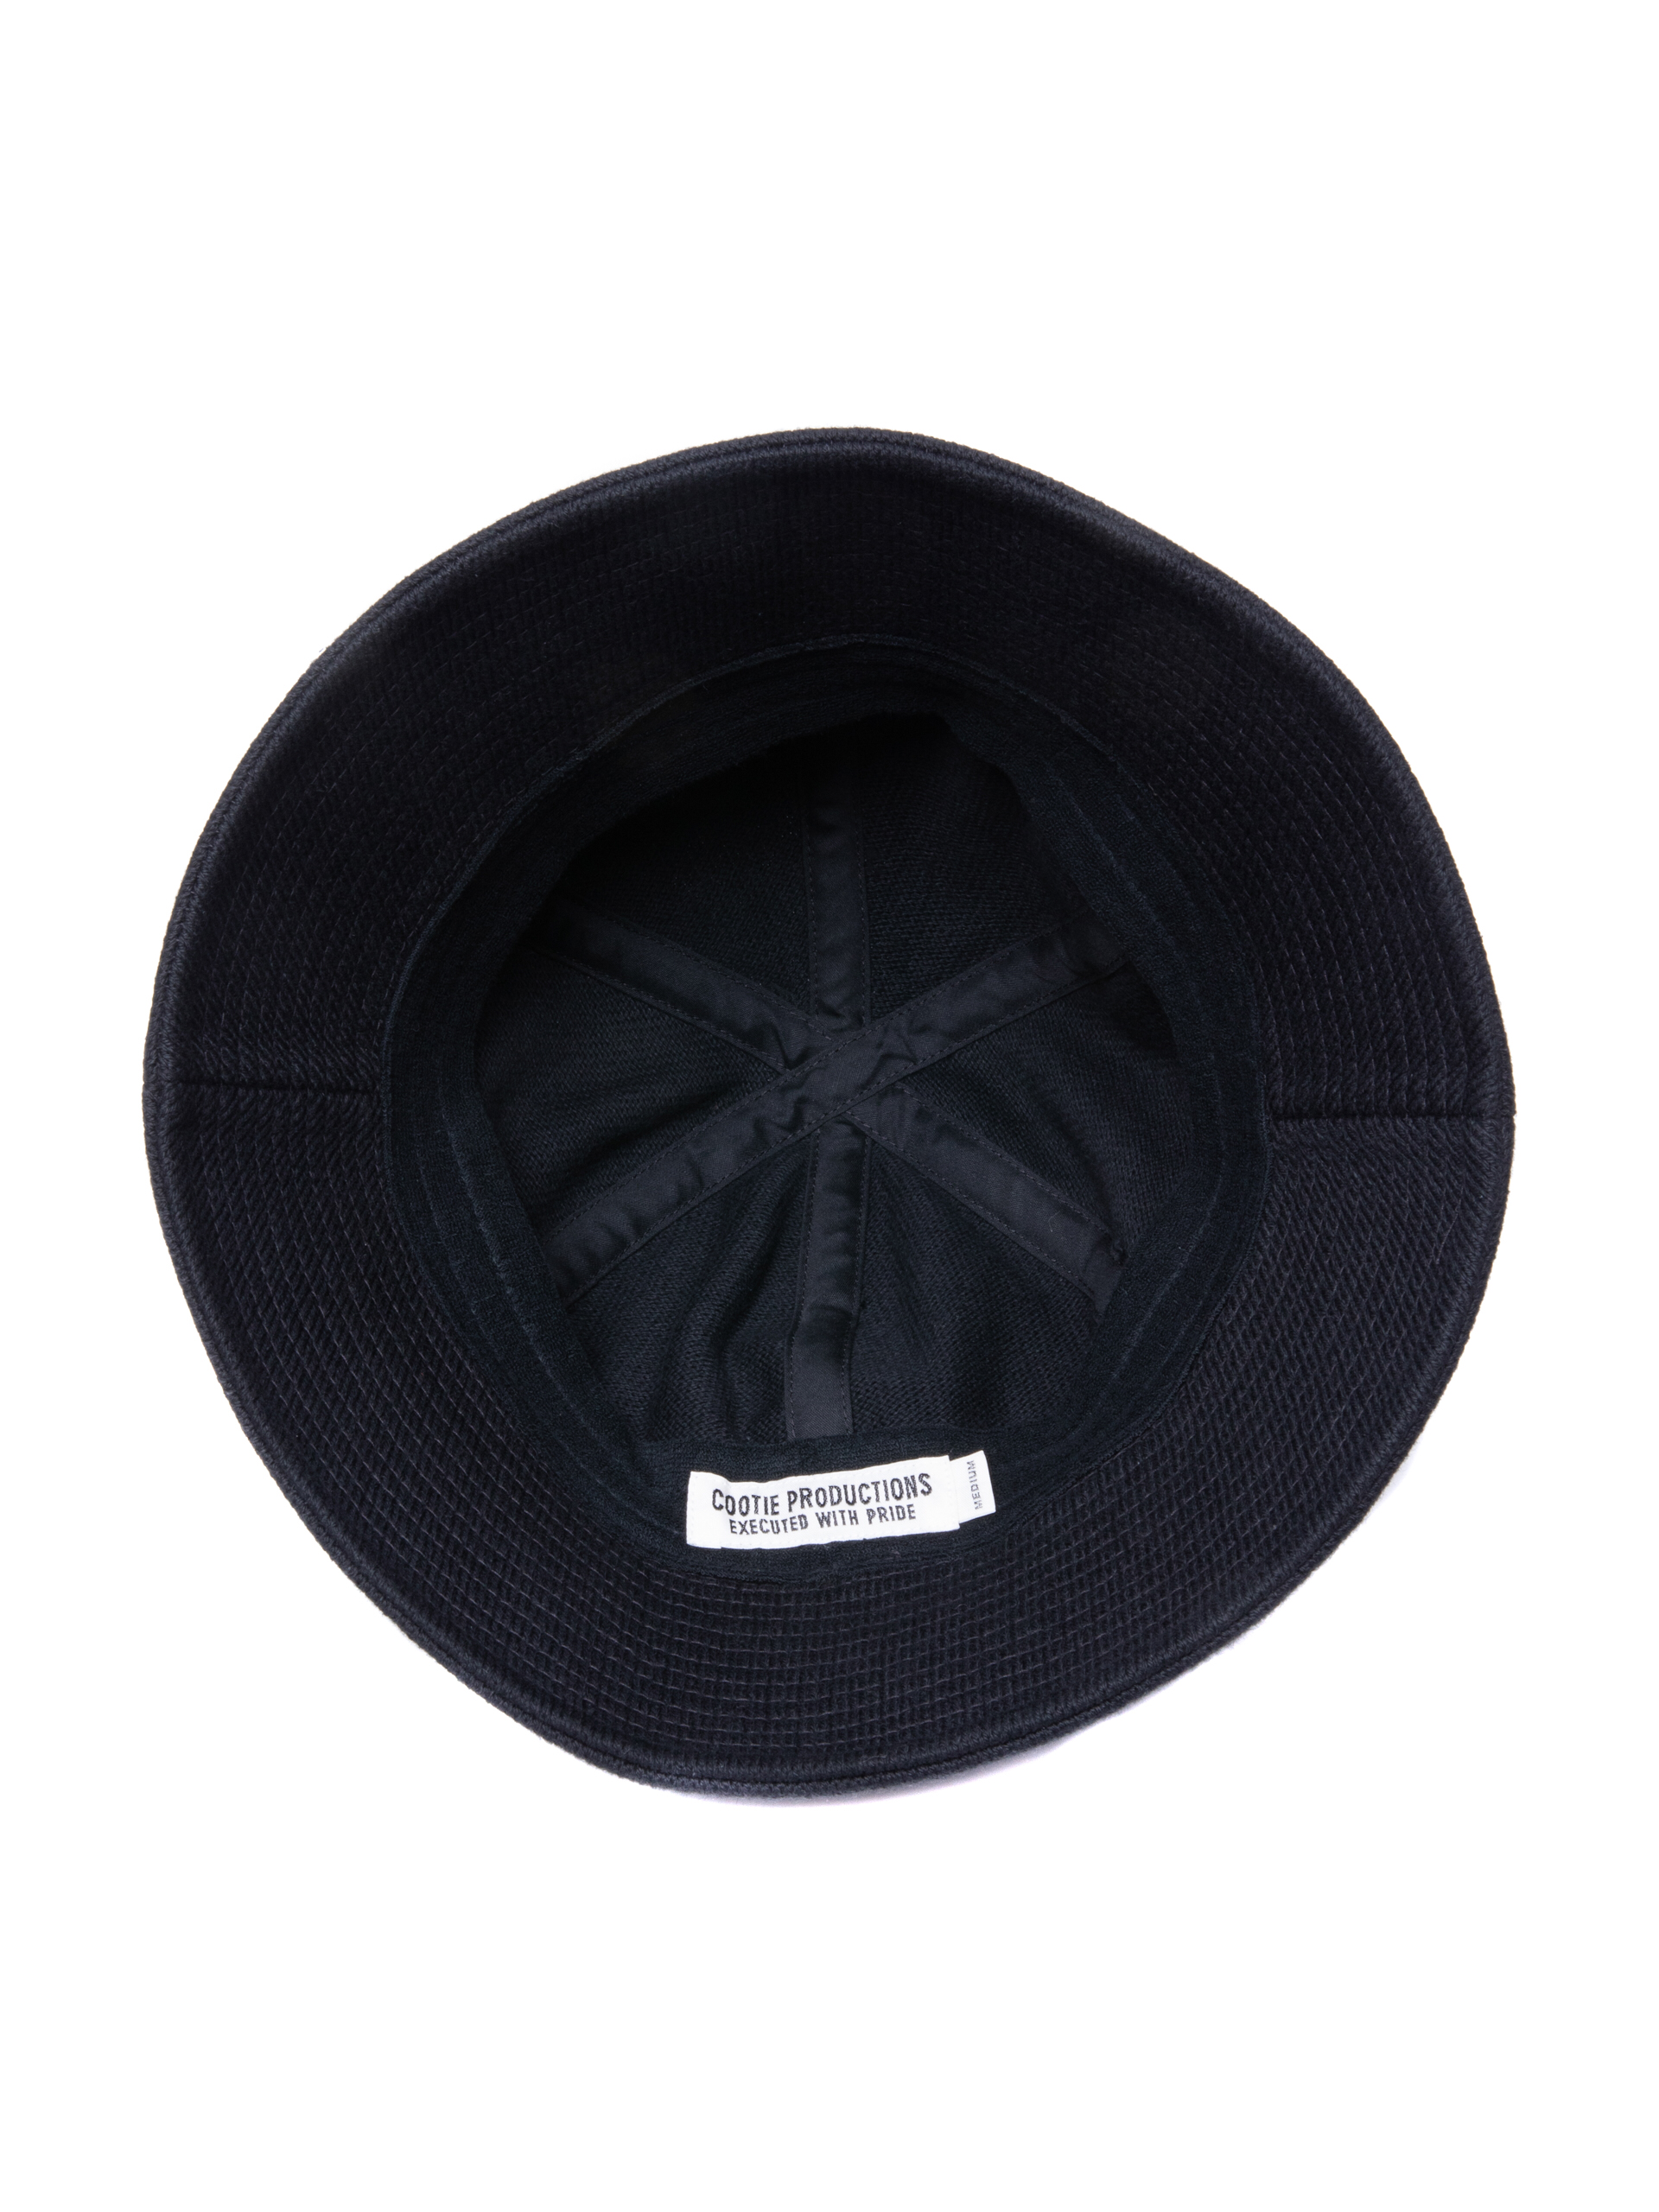 COOTIE / Knit Ball Hat -Black- | 80-HACHIMARU-